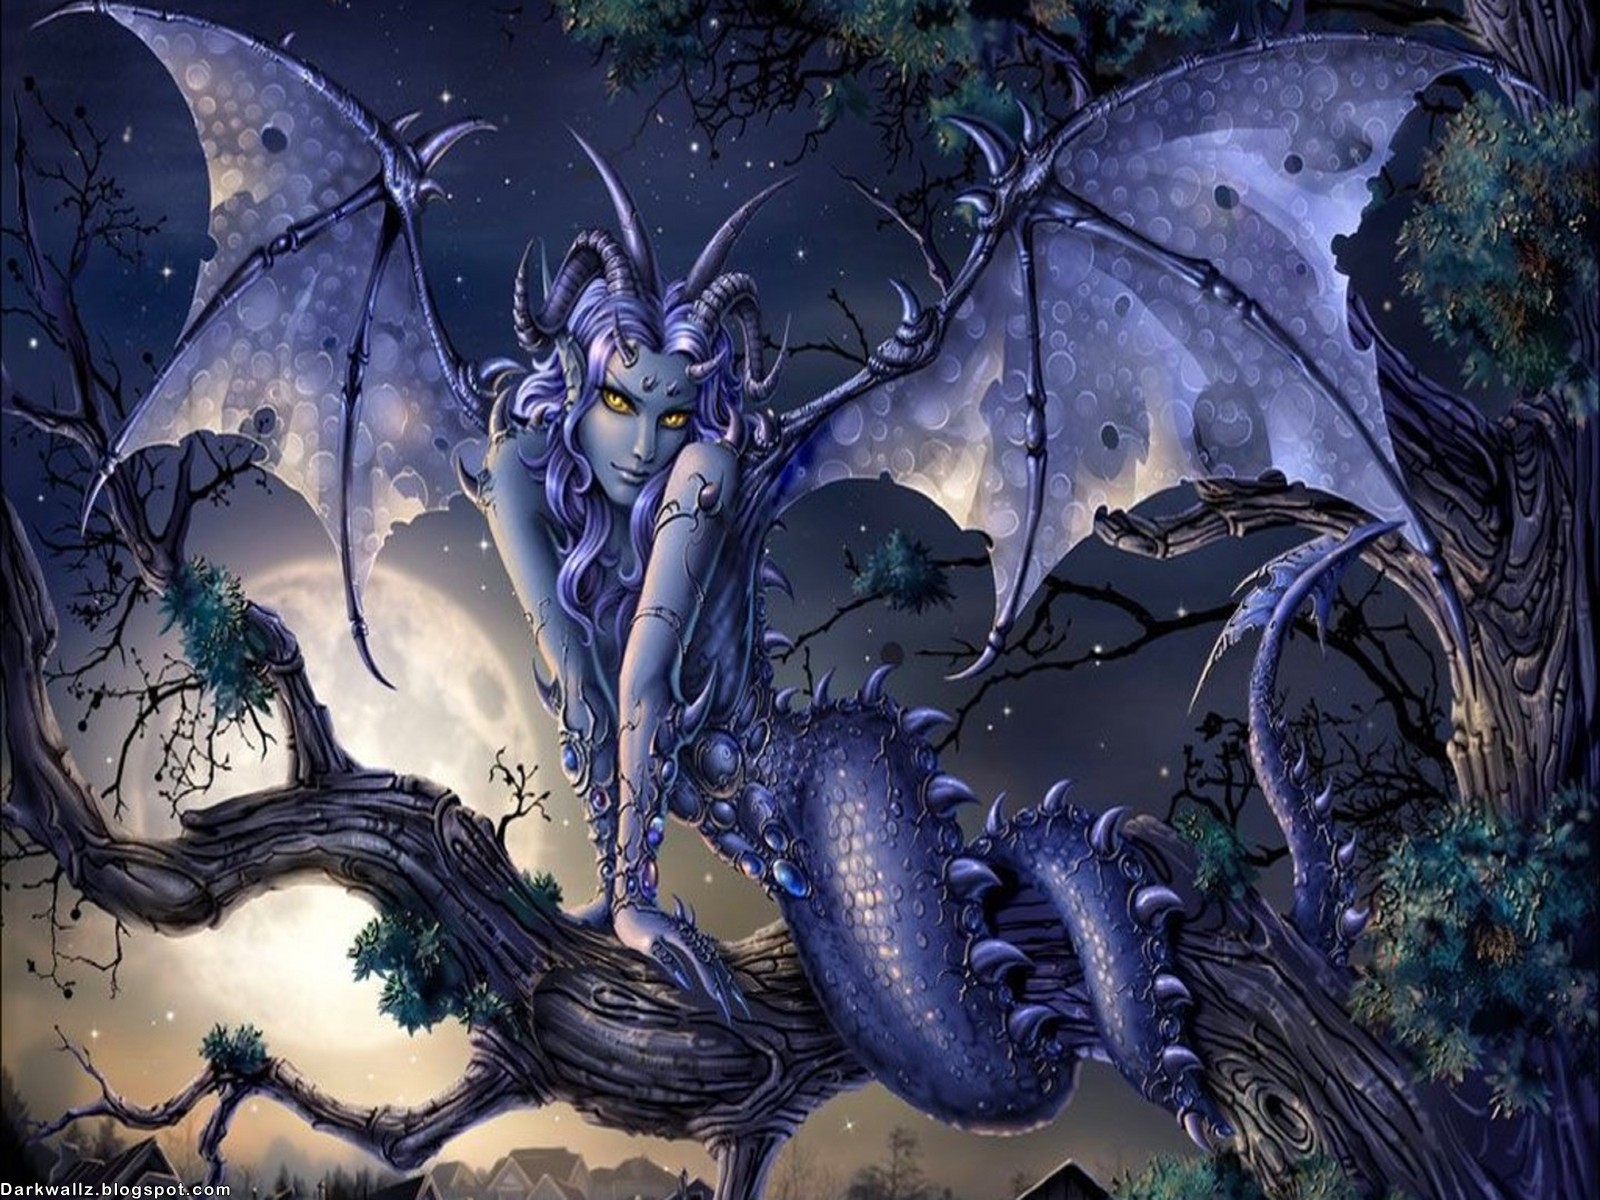  darkdark dragons wallpapers dark wallpapers black gothic freehtm